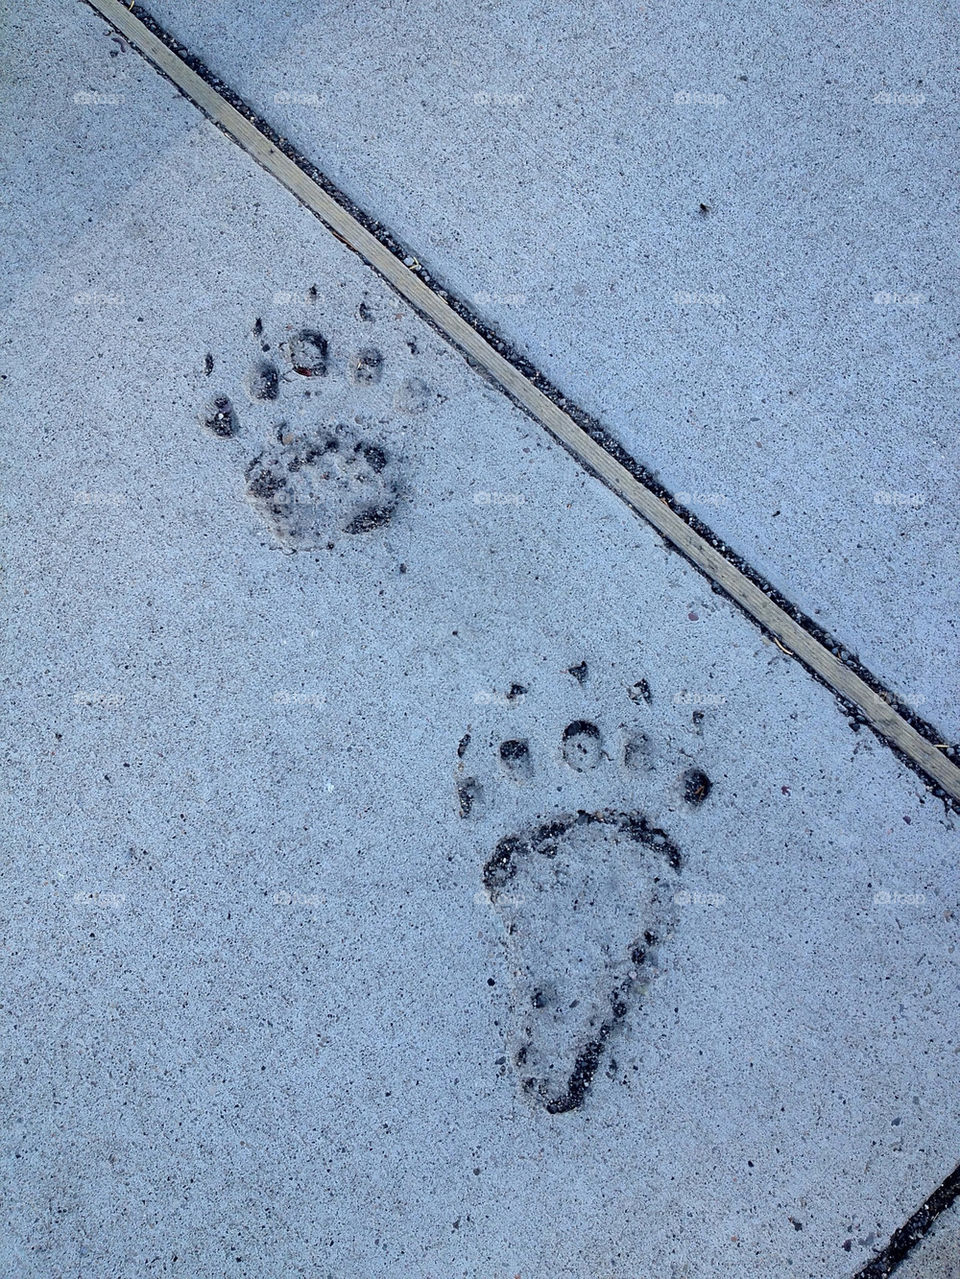 Bear footprint in concrete in Yellowstone NP